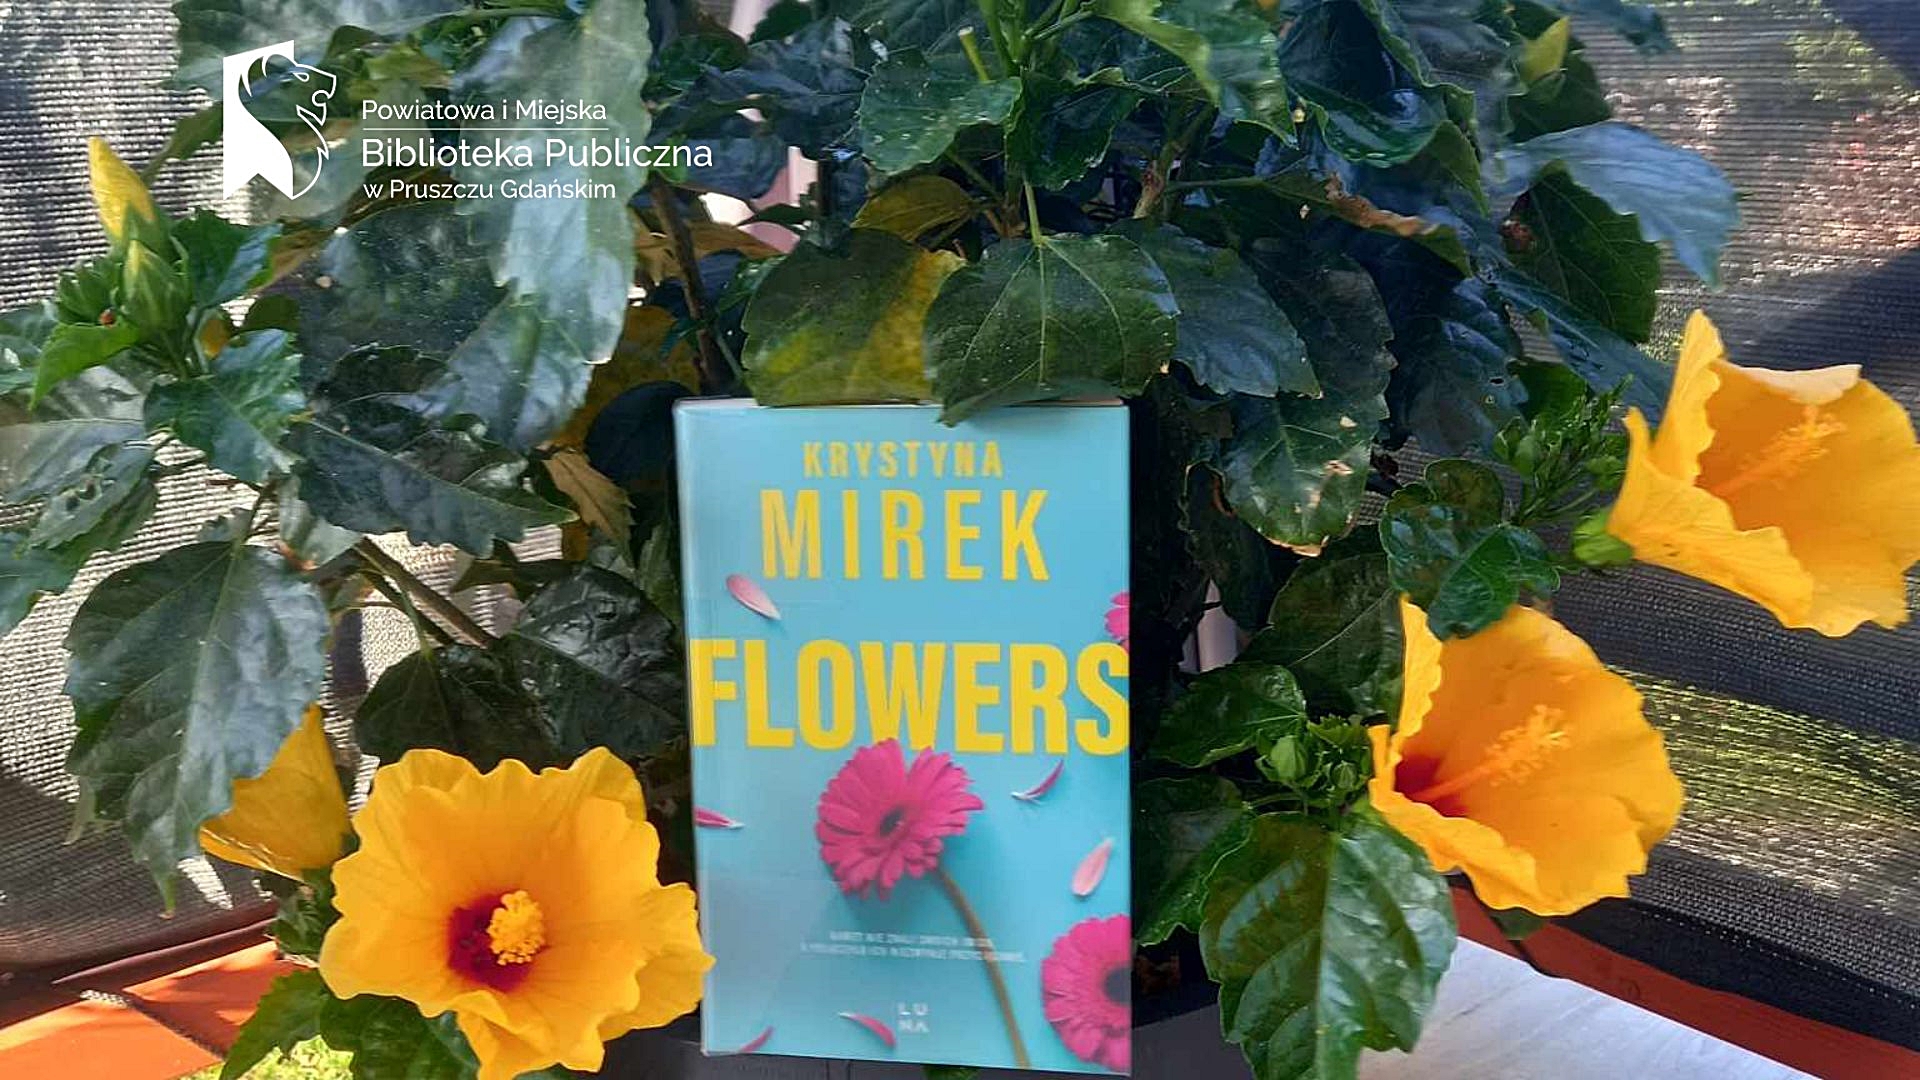 Książka Krystyny Mirek pt. Flowers wyeksponownana na tle żółtego hibiskusa.